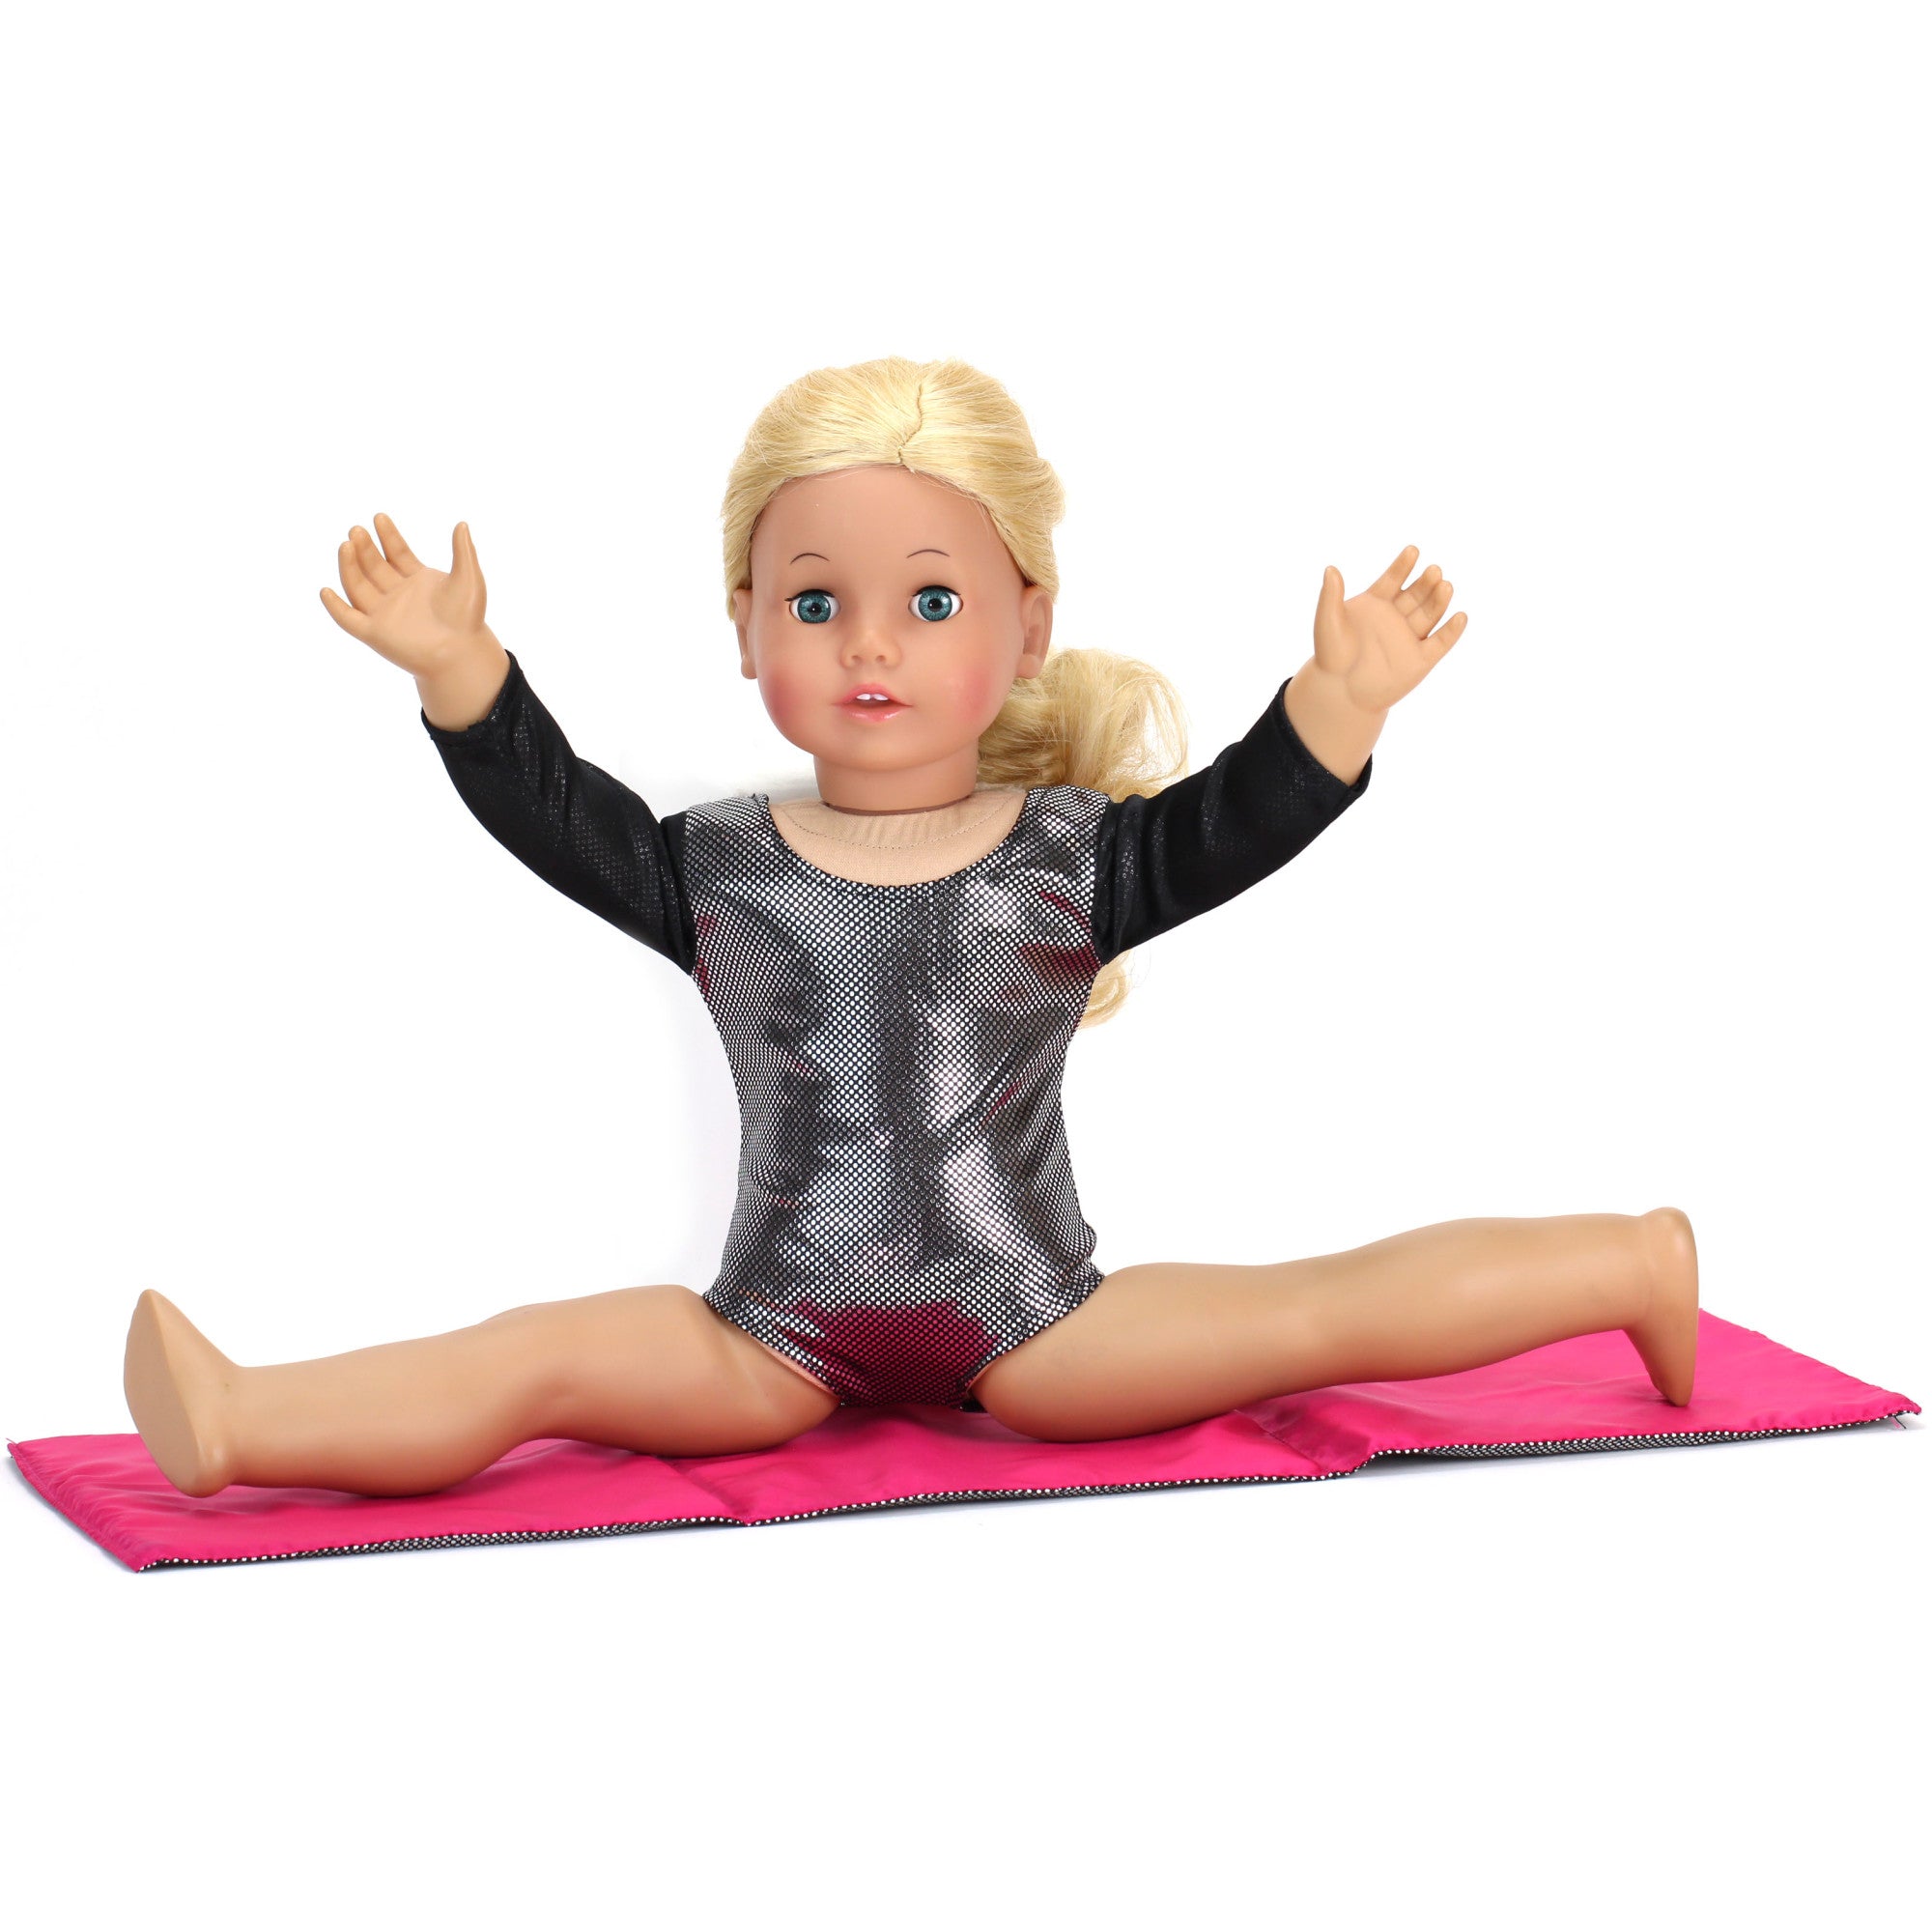 Sophia’s Sparkly Gymnastics Leotard & Tumbling Mat Yoga Floor Exercise Set for 18” Dolls, Black